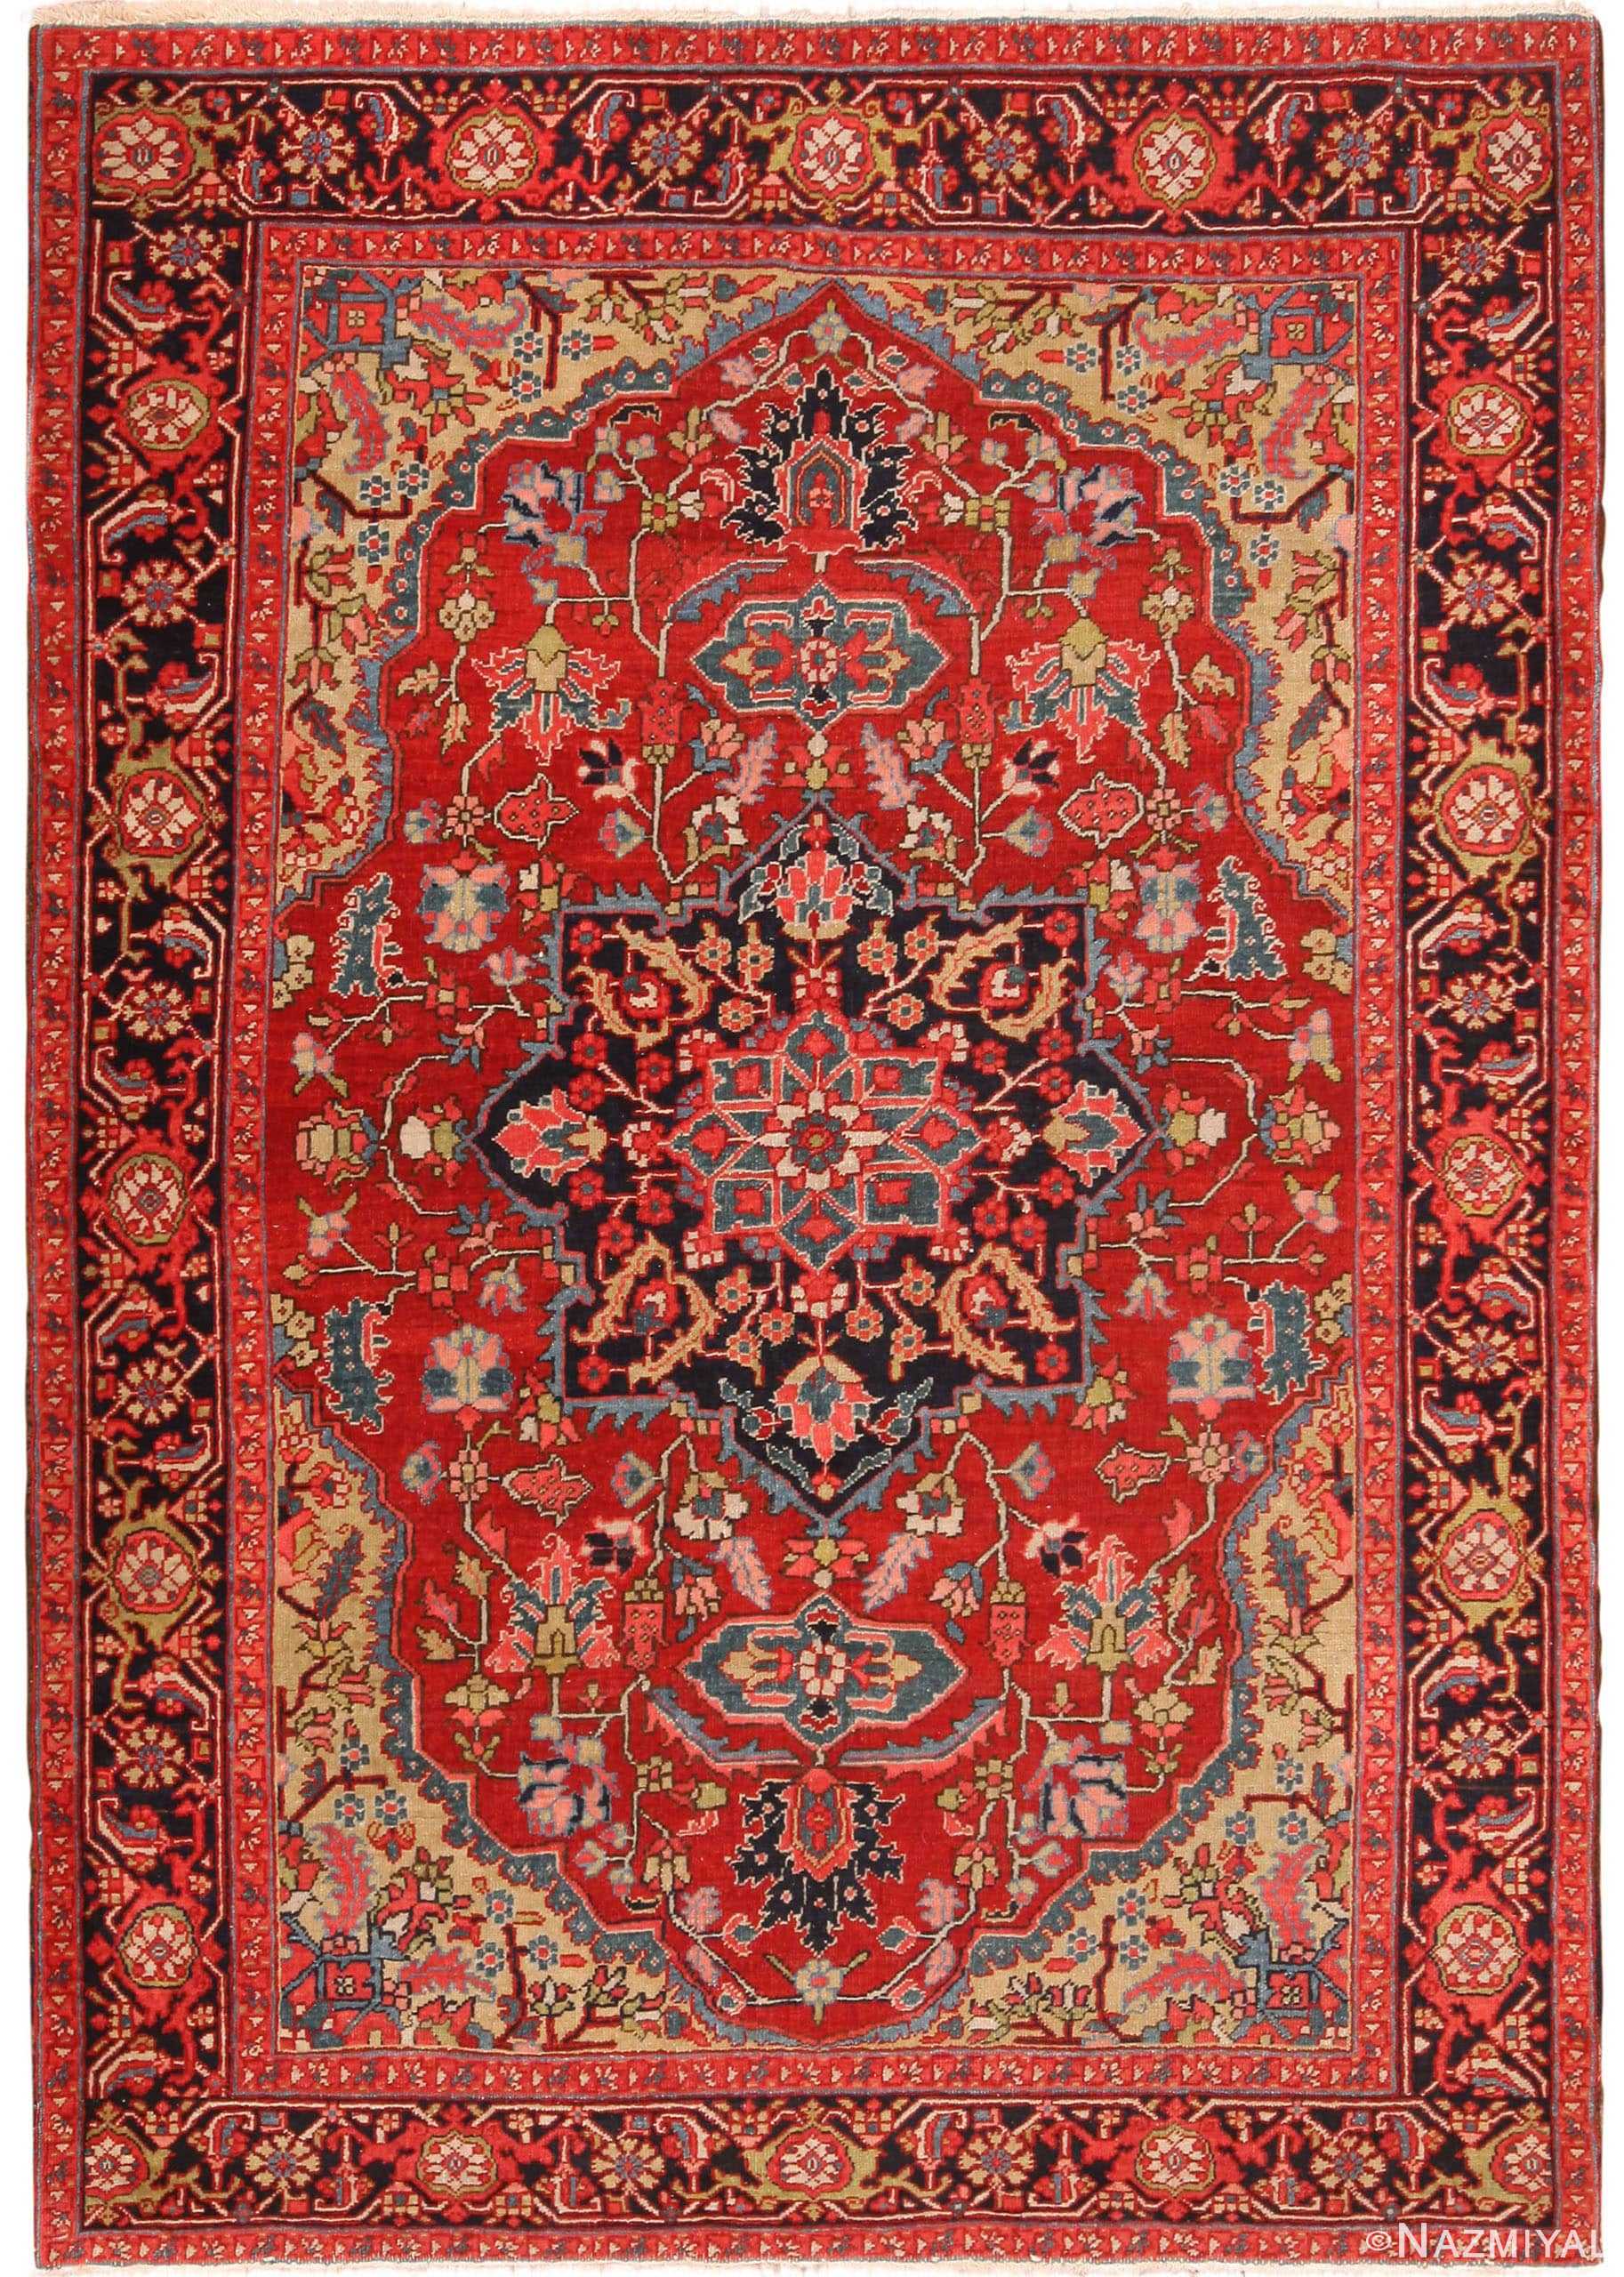 Marvelous Antique Persian Heriz Rug 71141 by Nazmiyal Antique Rugs